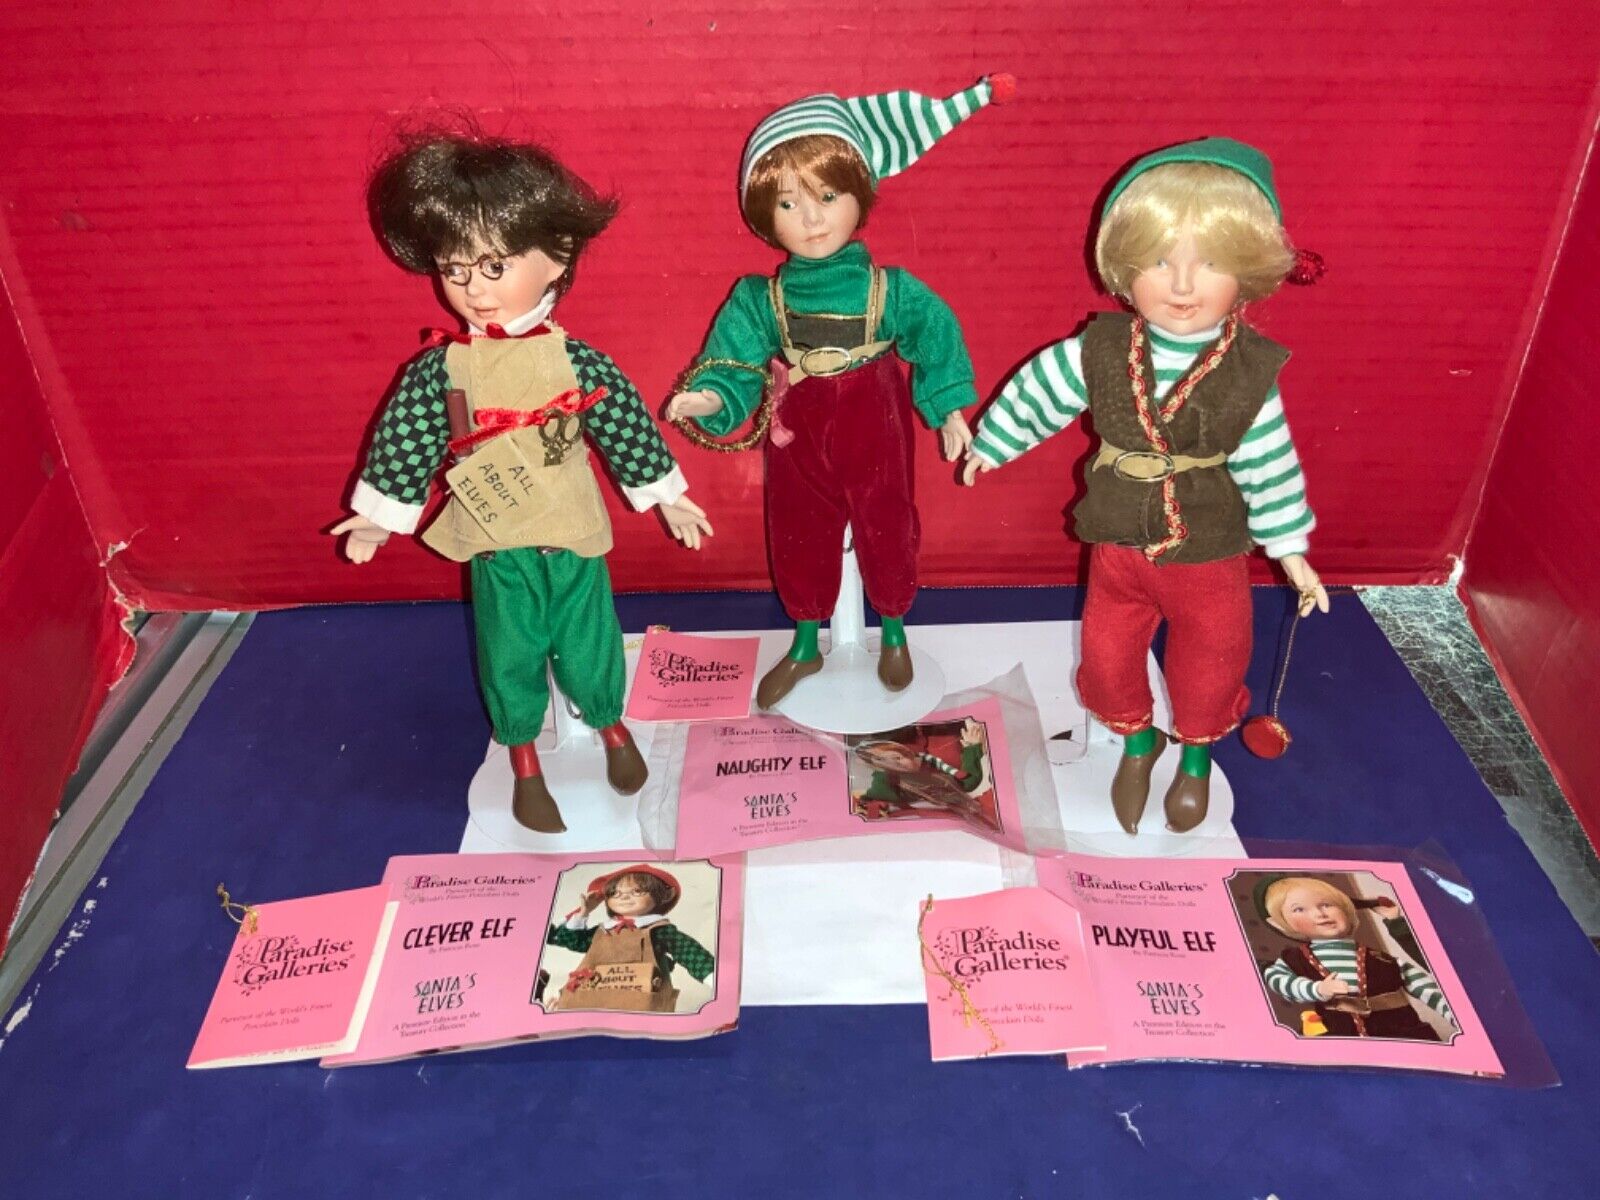 Vintage Paradise Galleries Santa’s Elves - Clever, Naughty, Playful Elves Lot 3